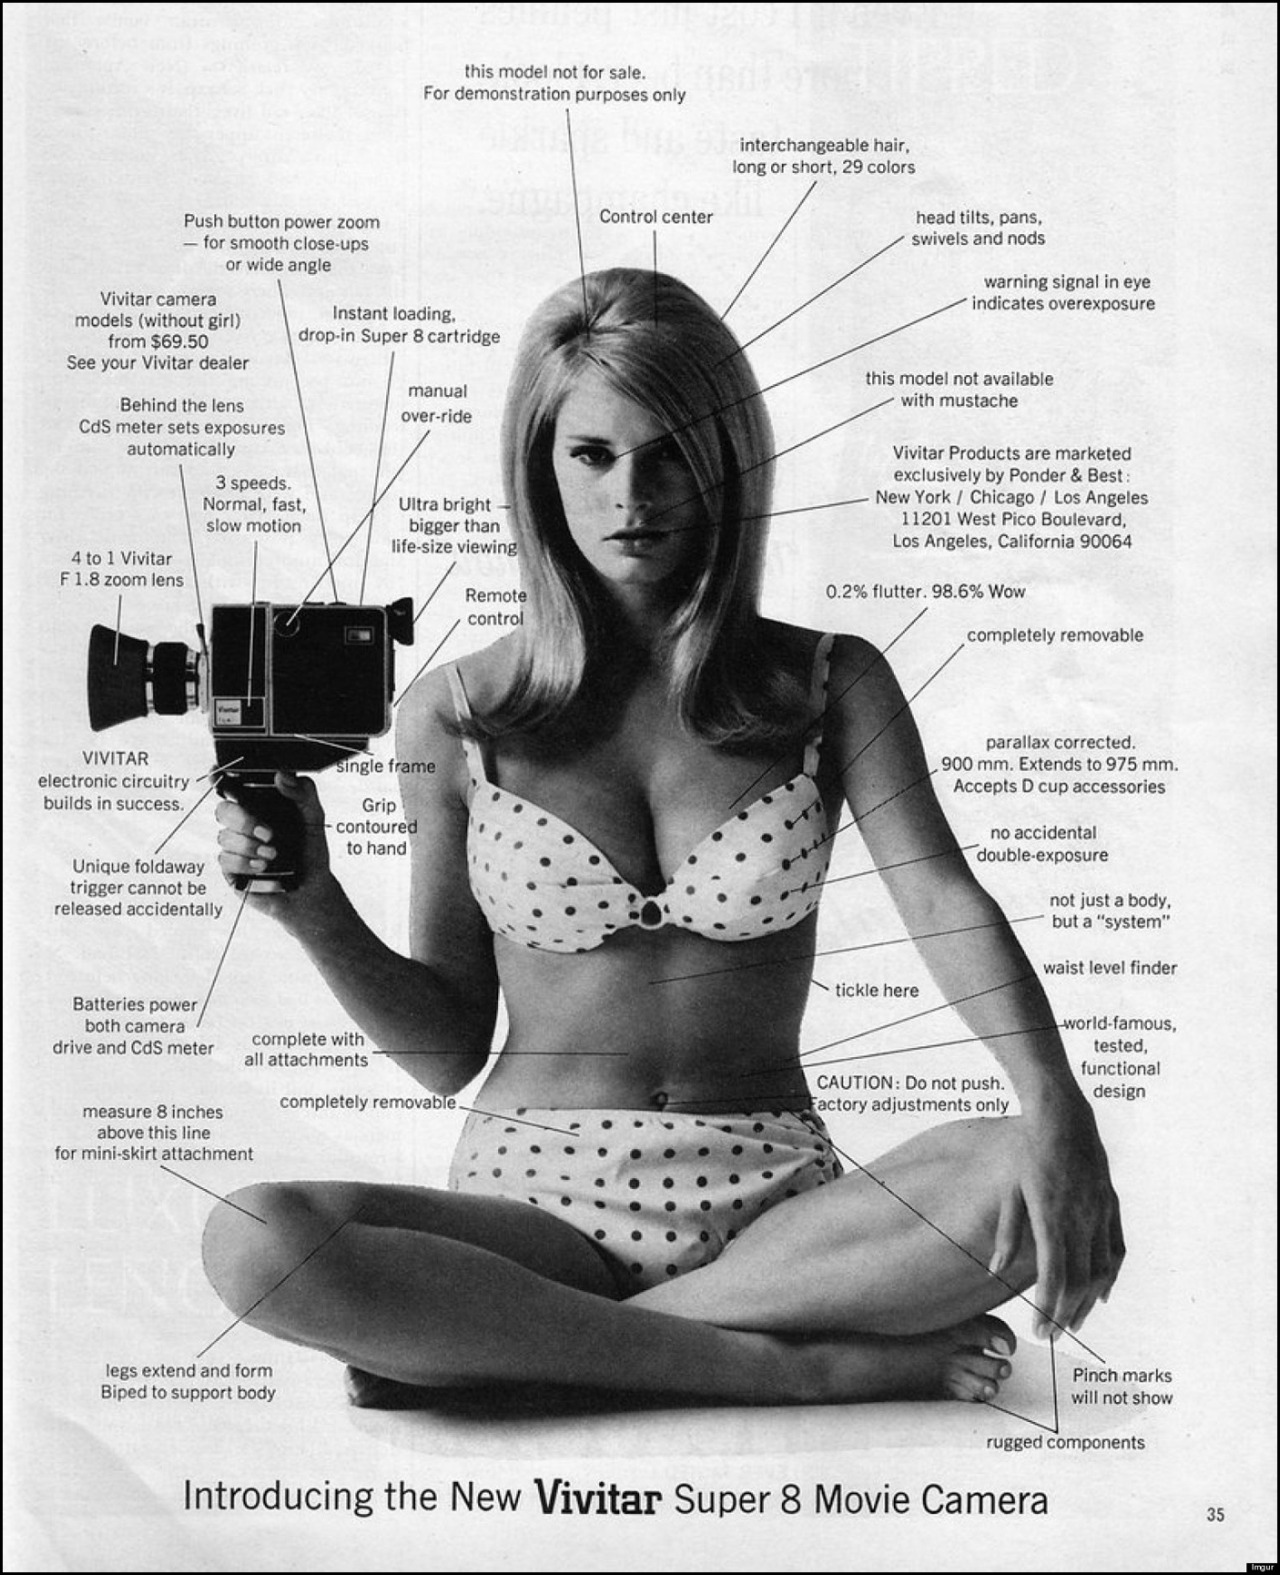 Vivitar camera ad from Playboy magazine, 1967.